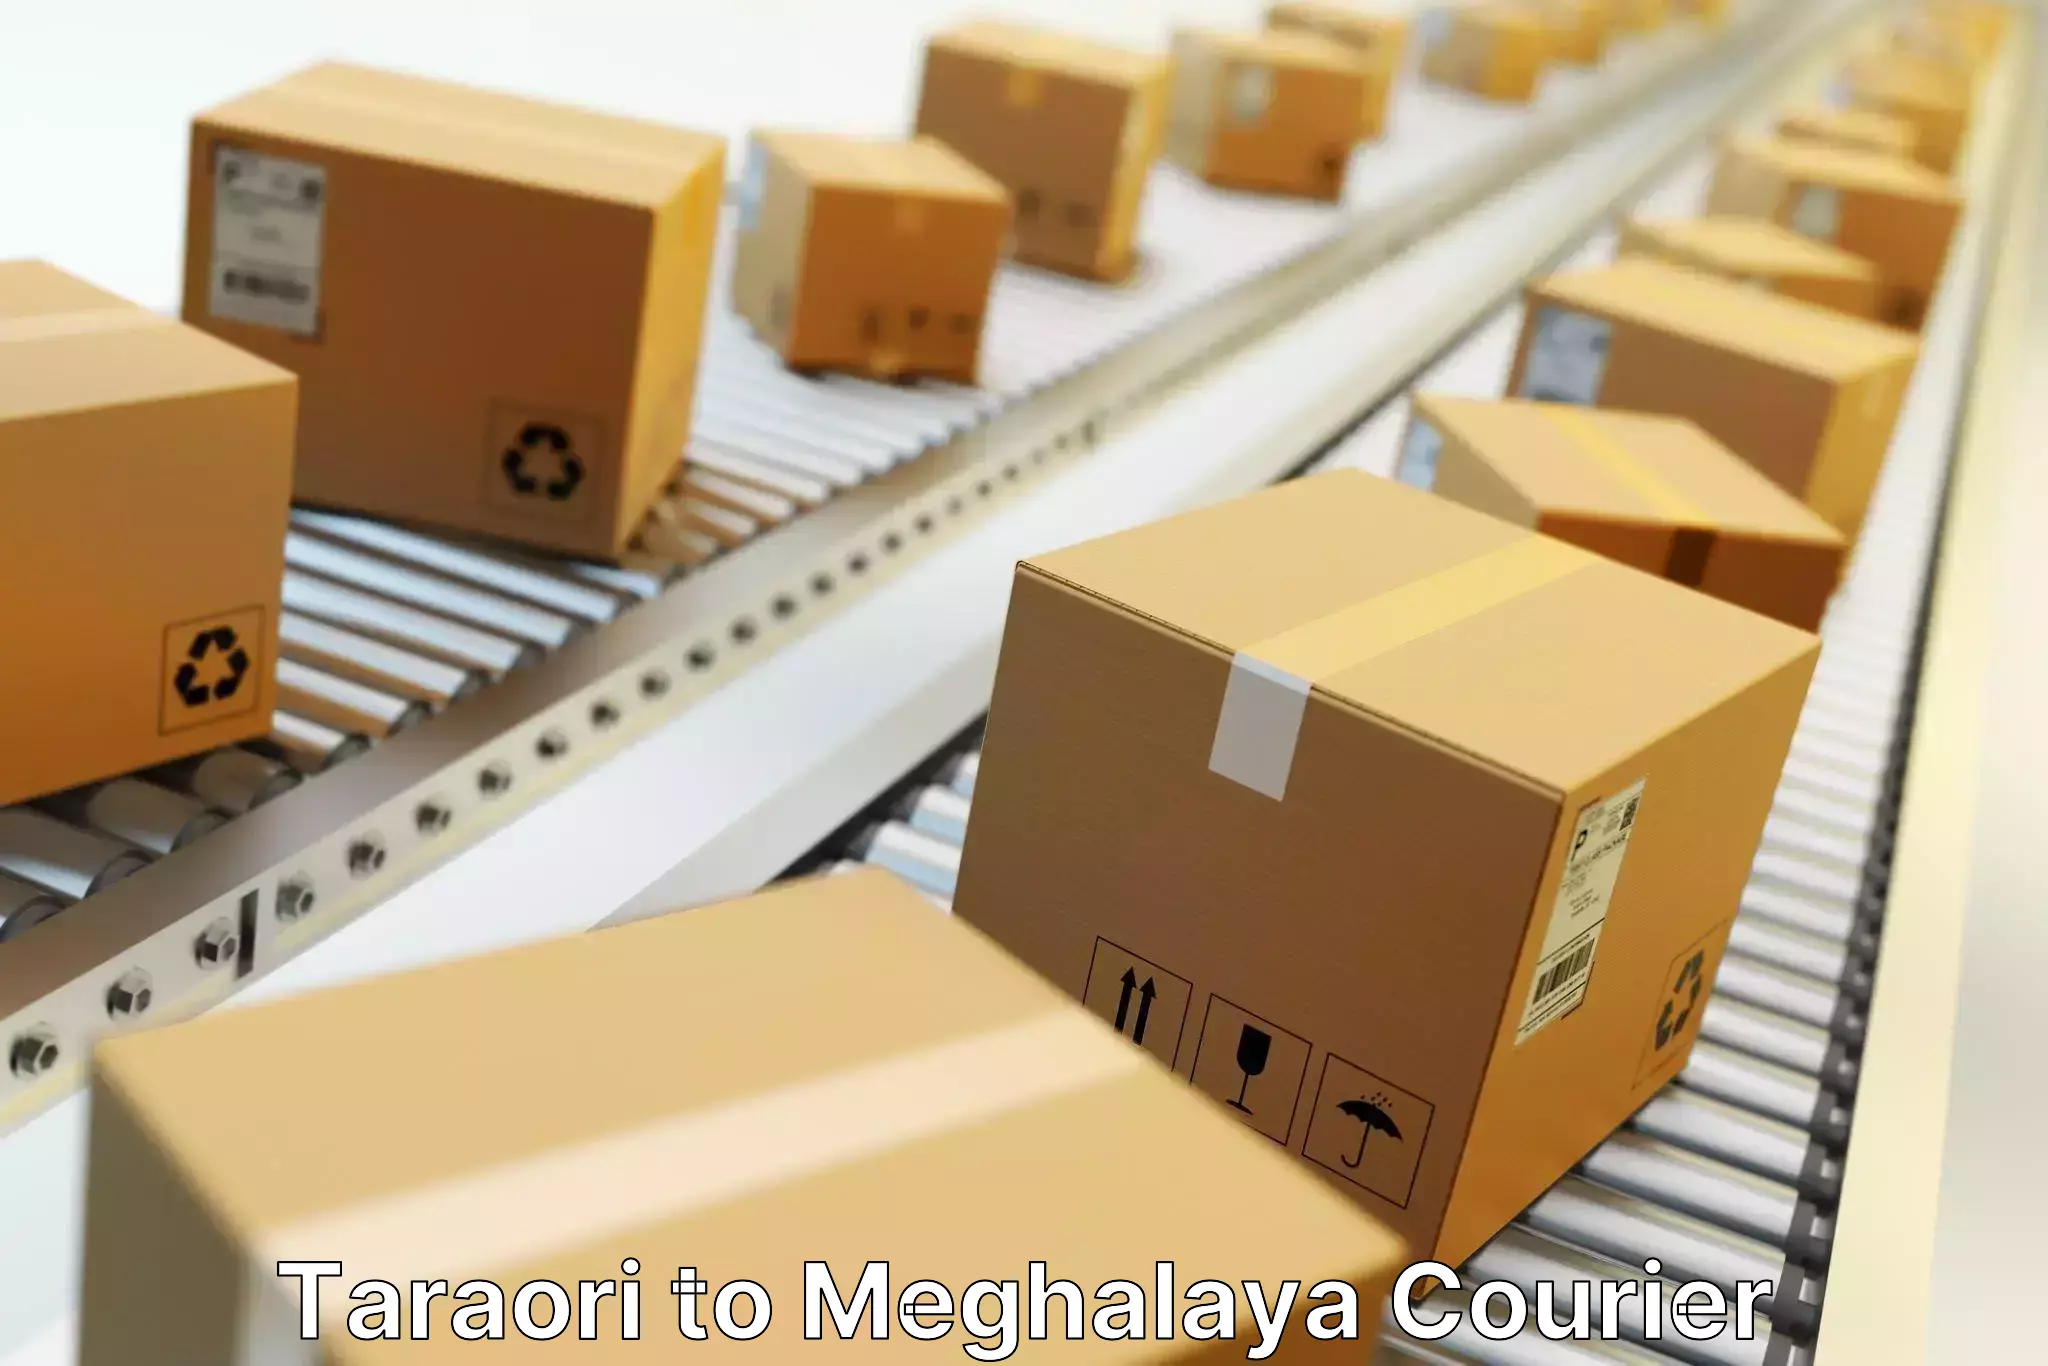 Global logistics network Taraori to Meghalaya